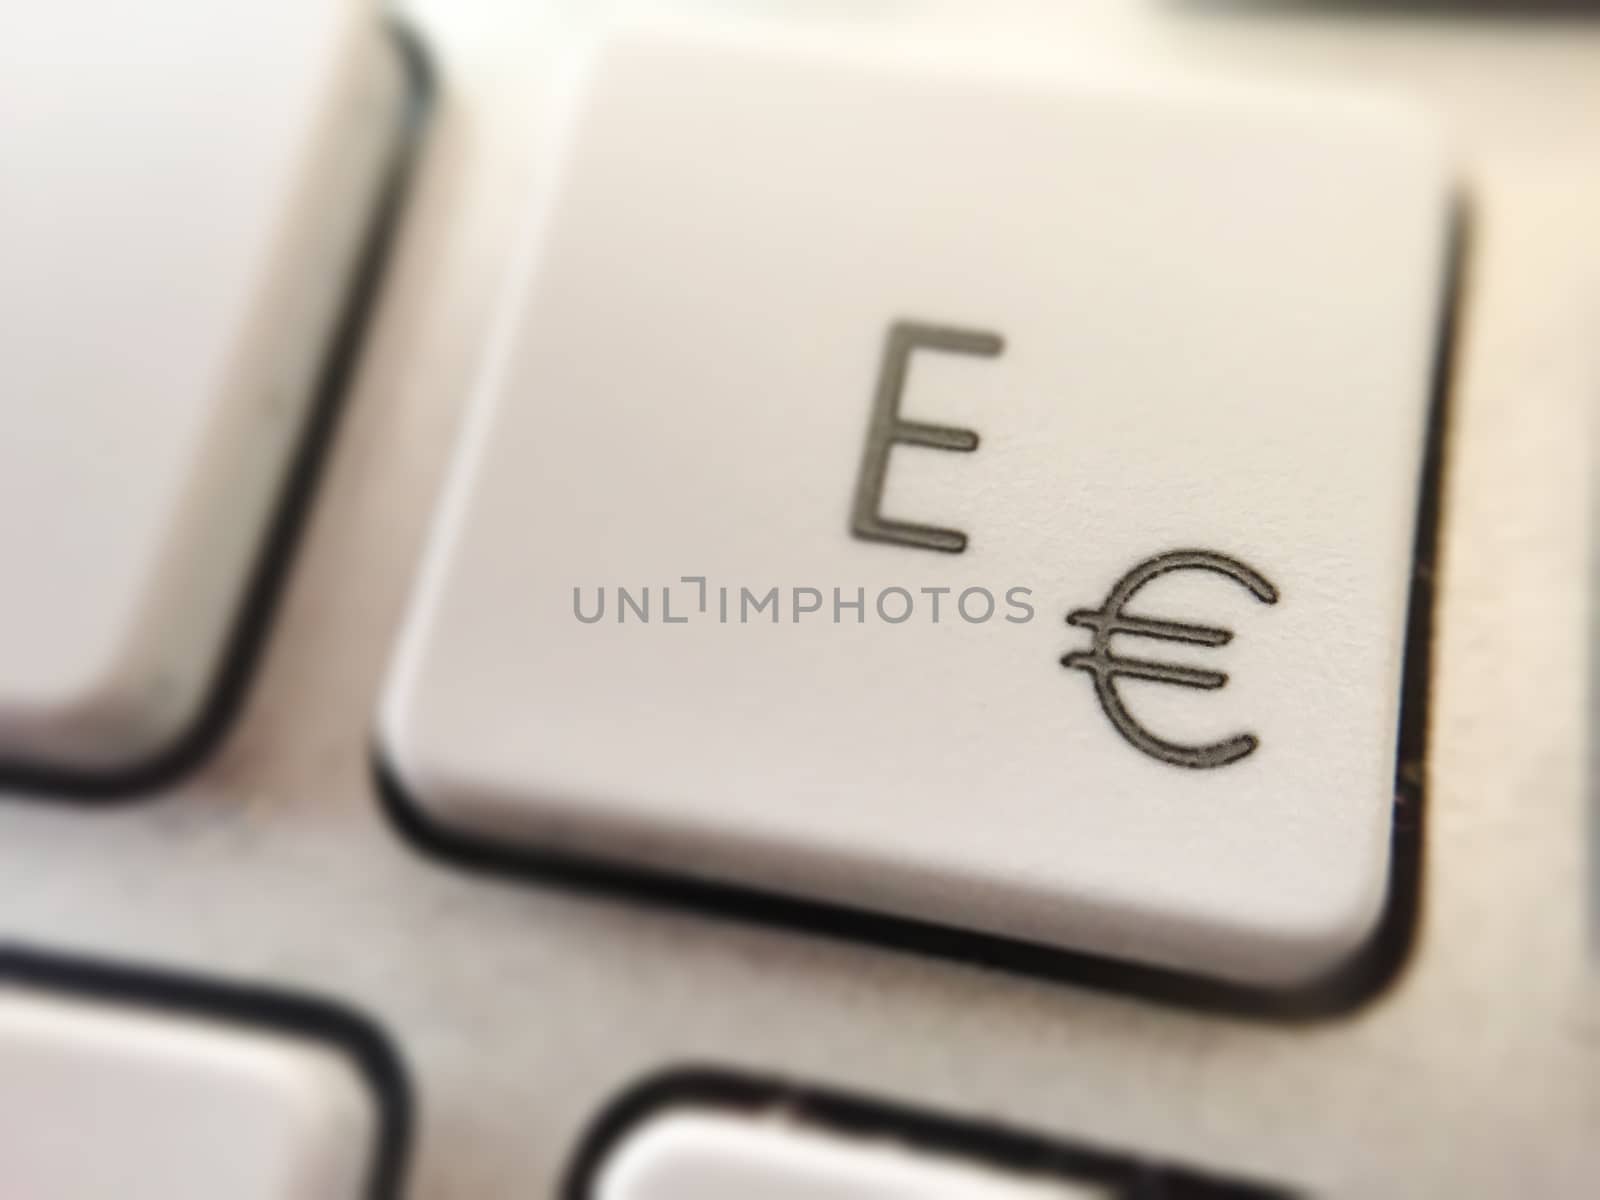 E letter and Euro coin Symbol on a Pc keyboard button by rarrarorro